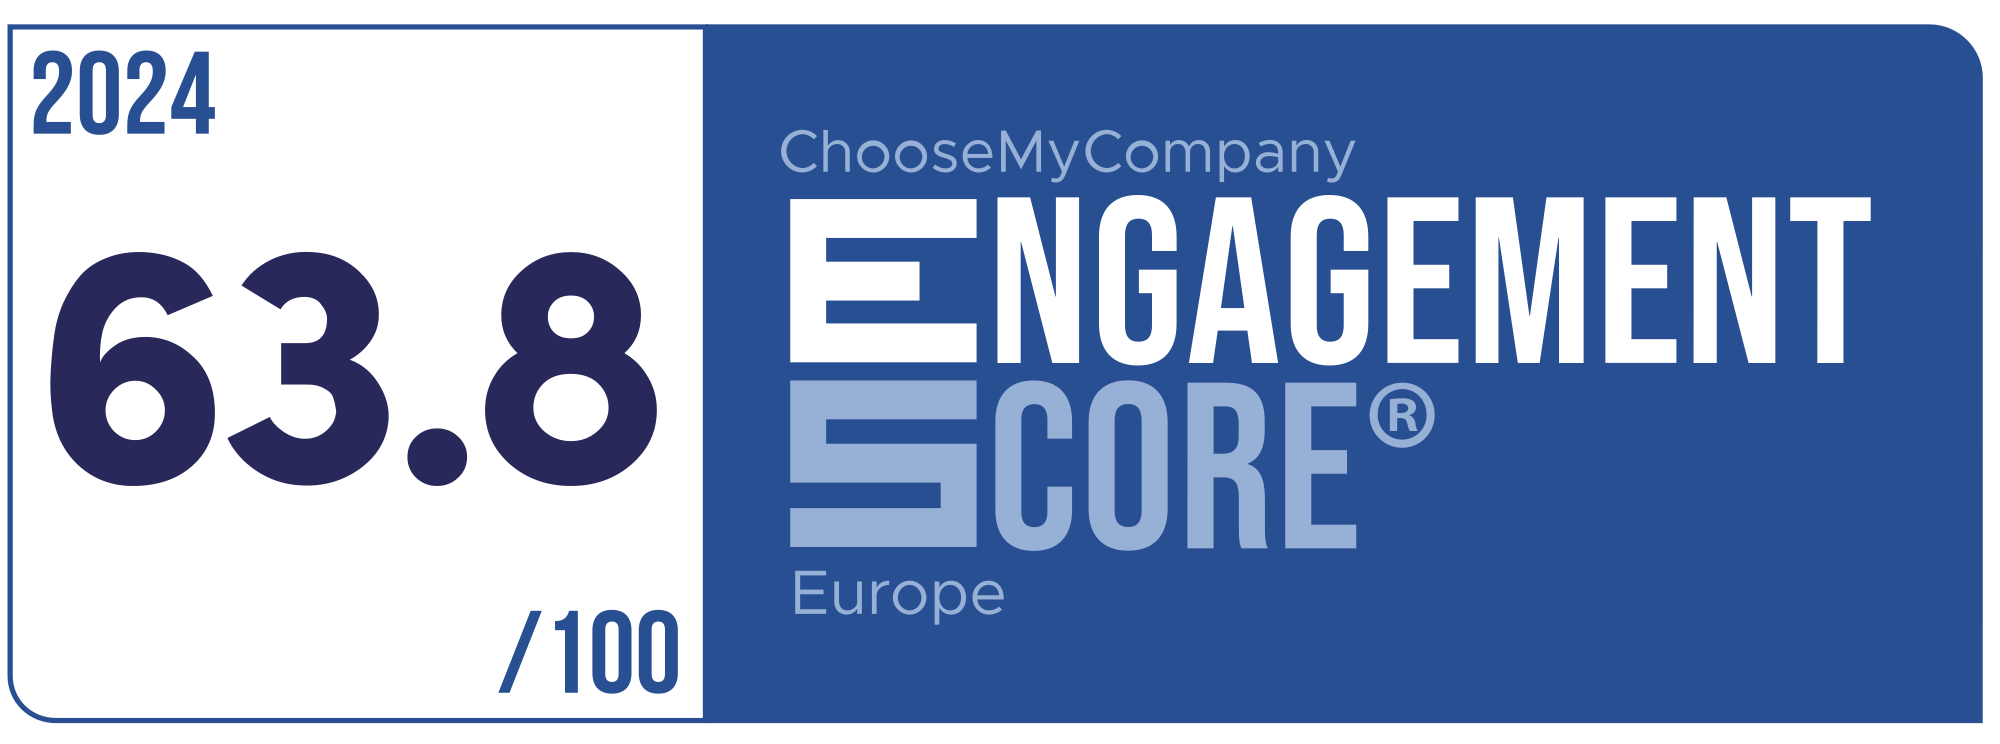 Label Engagement Score 2024 Europe